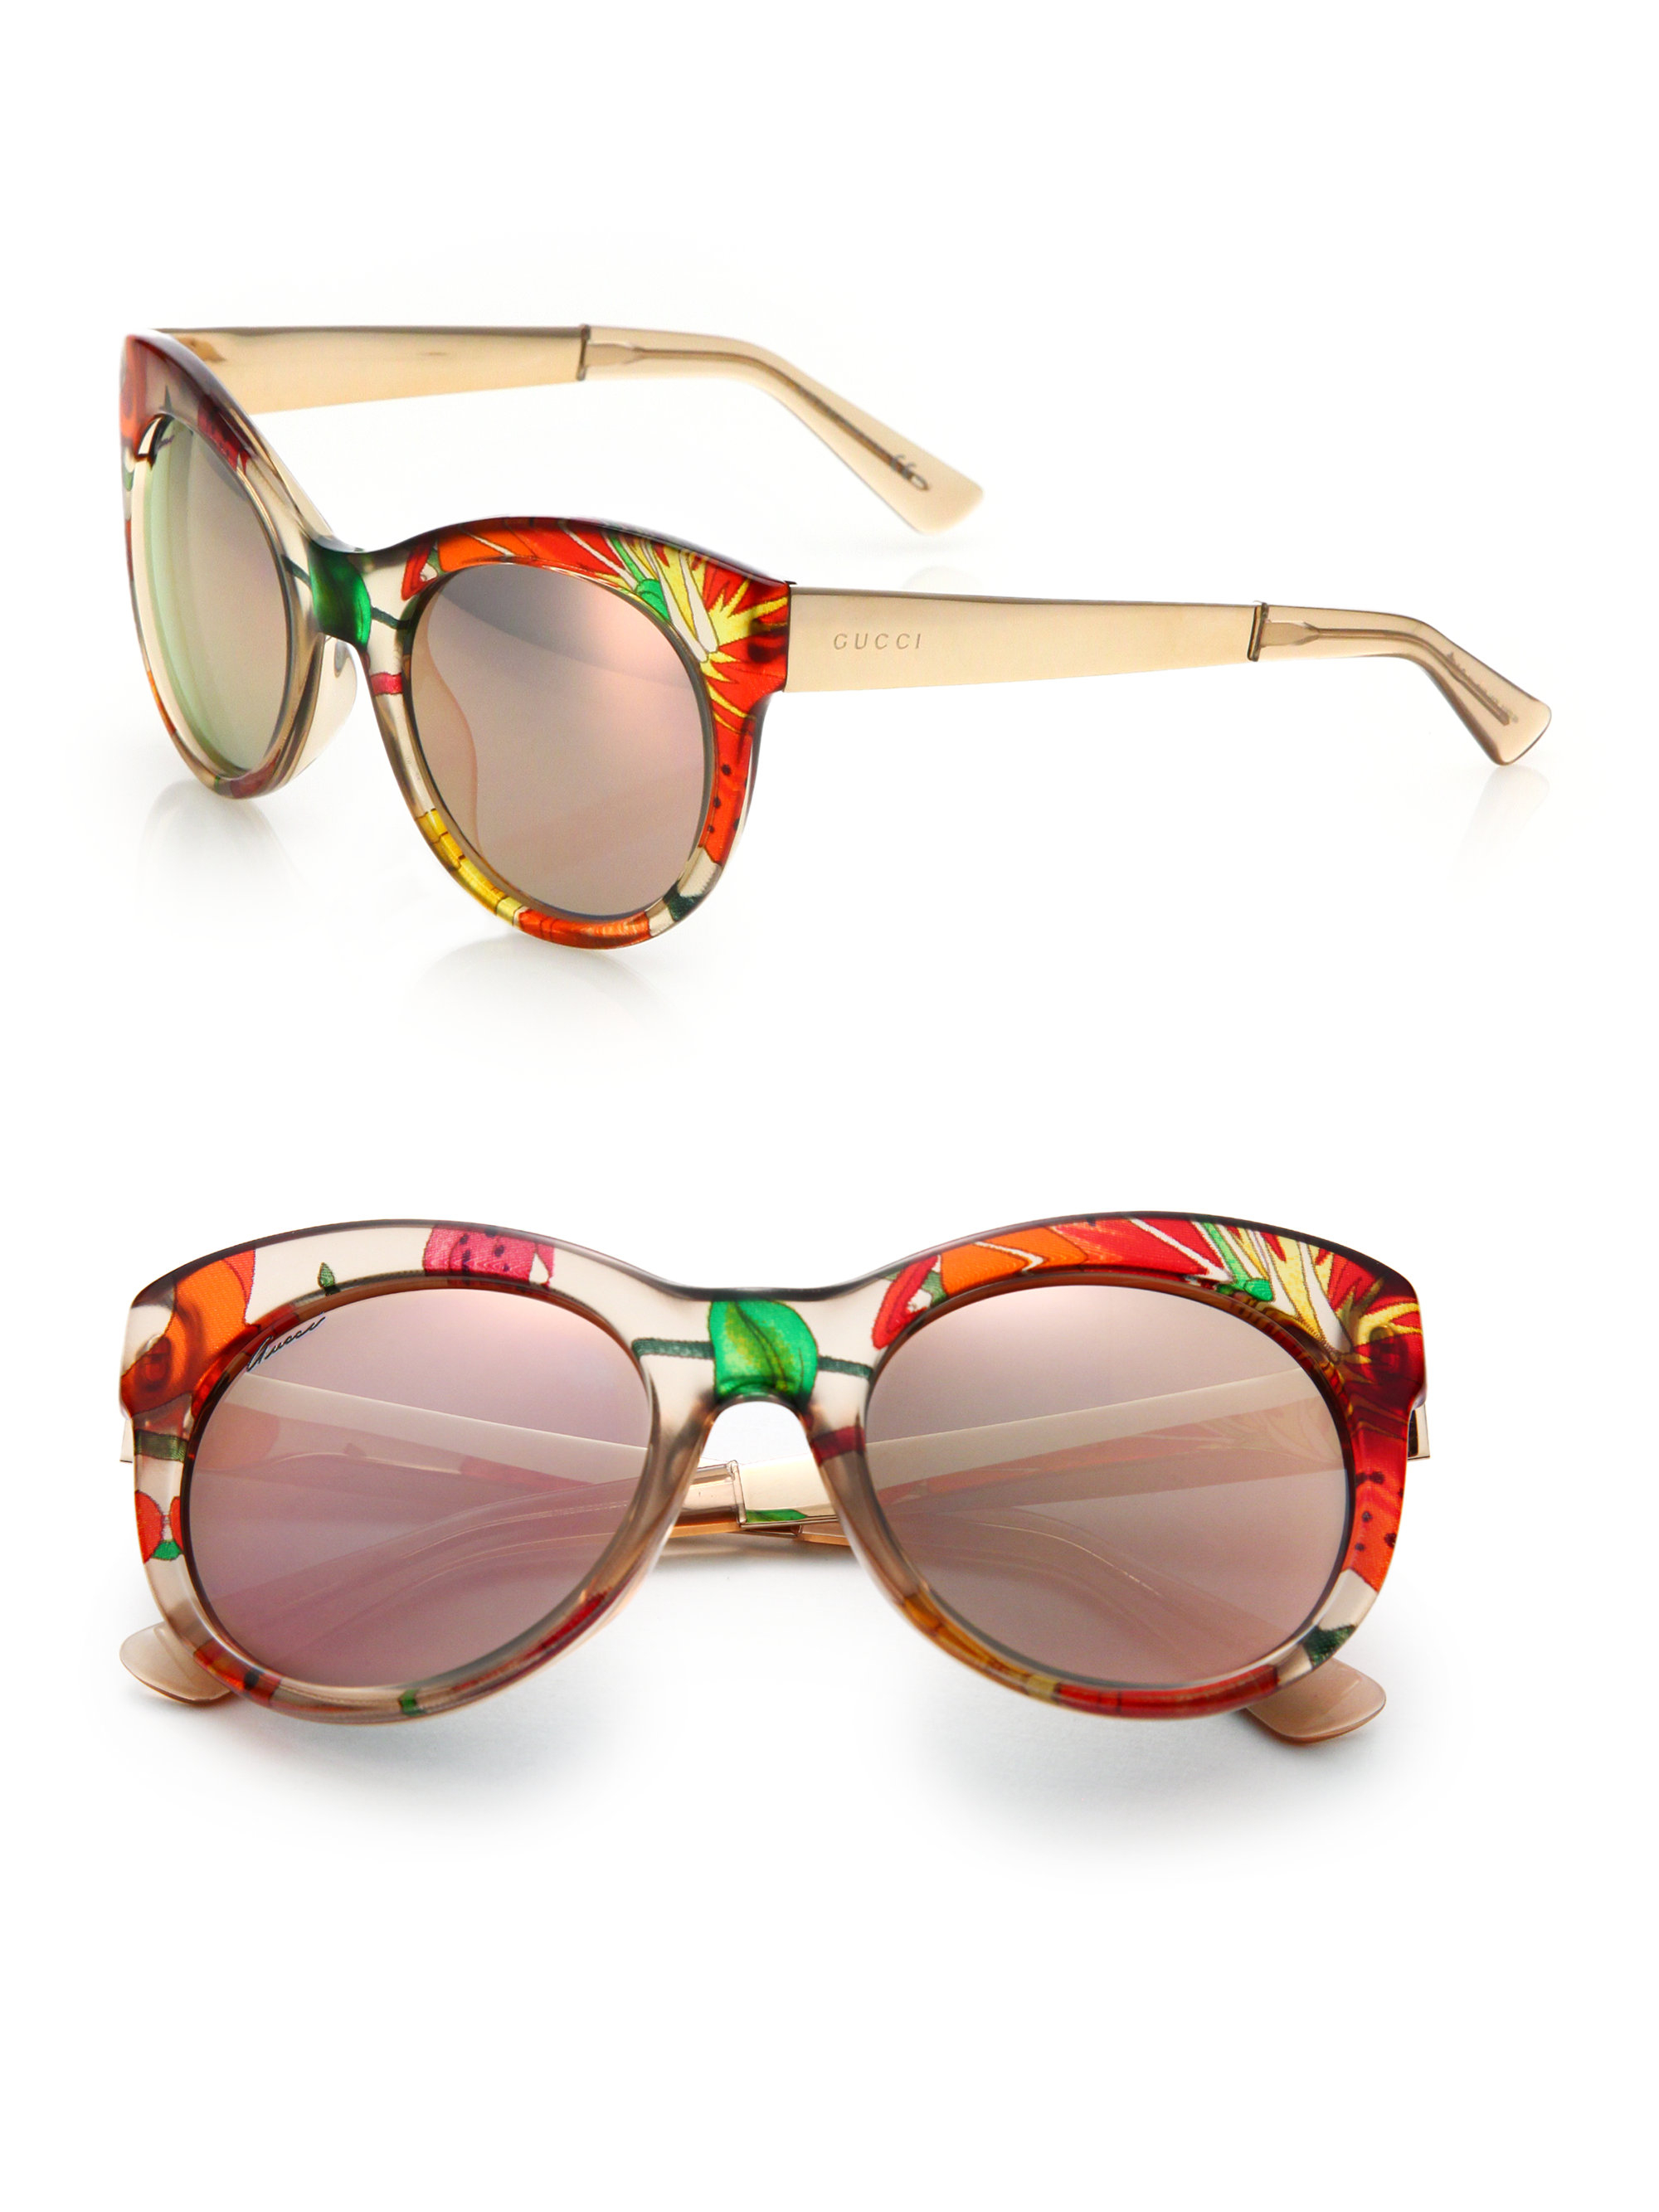 Lyst - Gucci Chunky 53mm Round Sunglasses in Orange